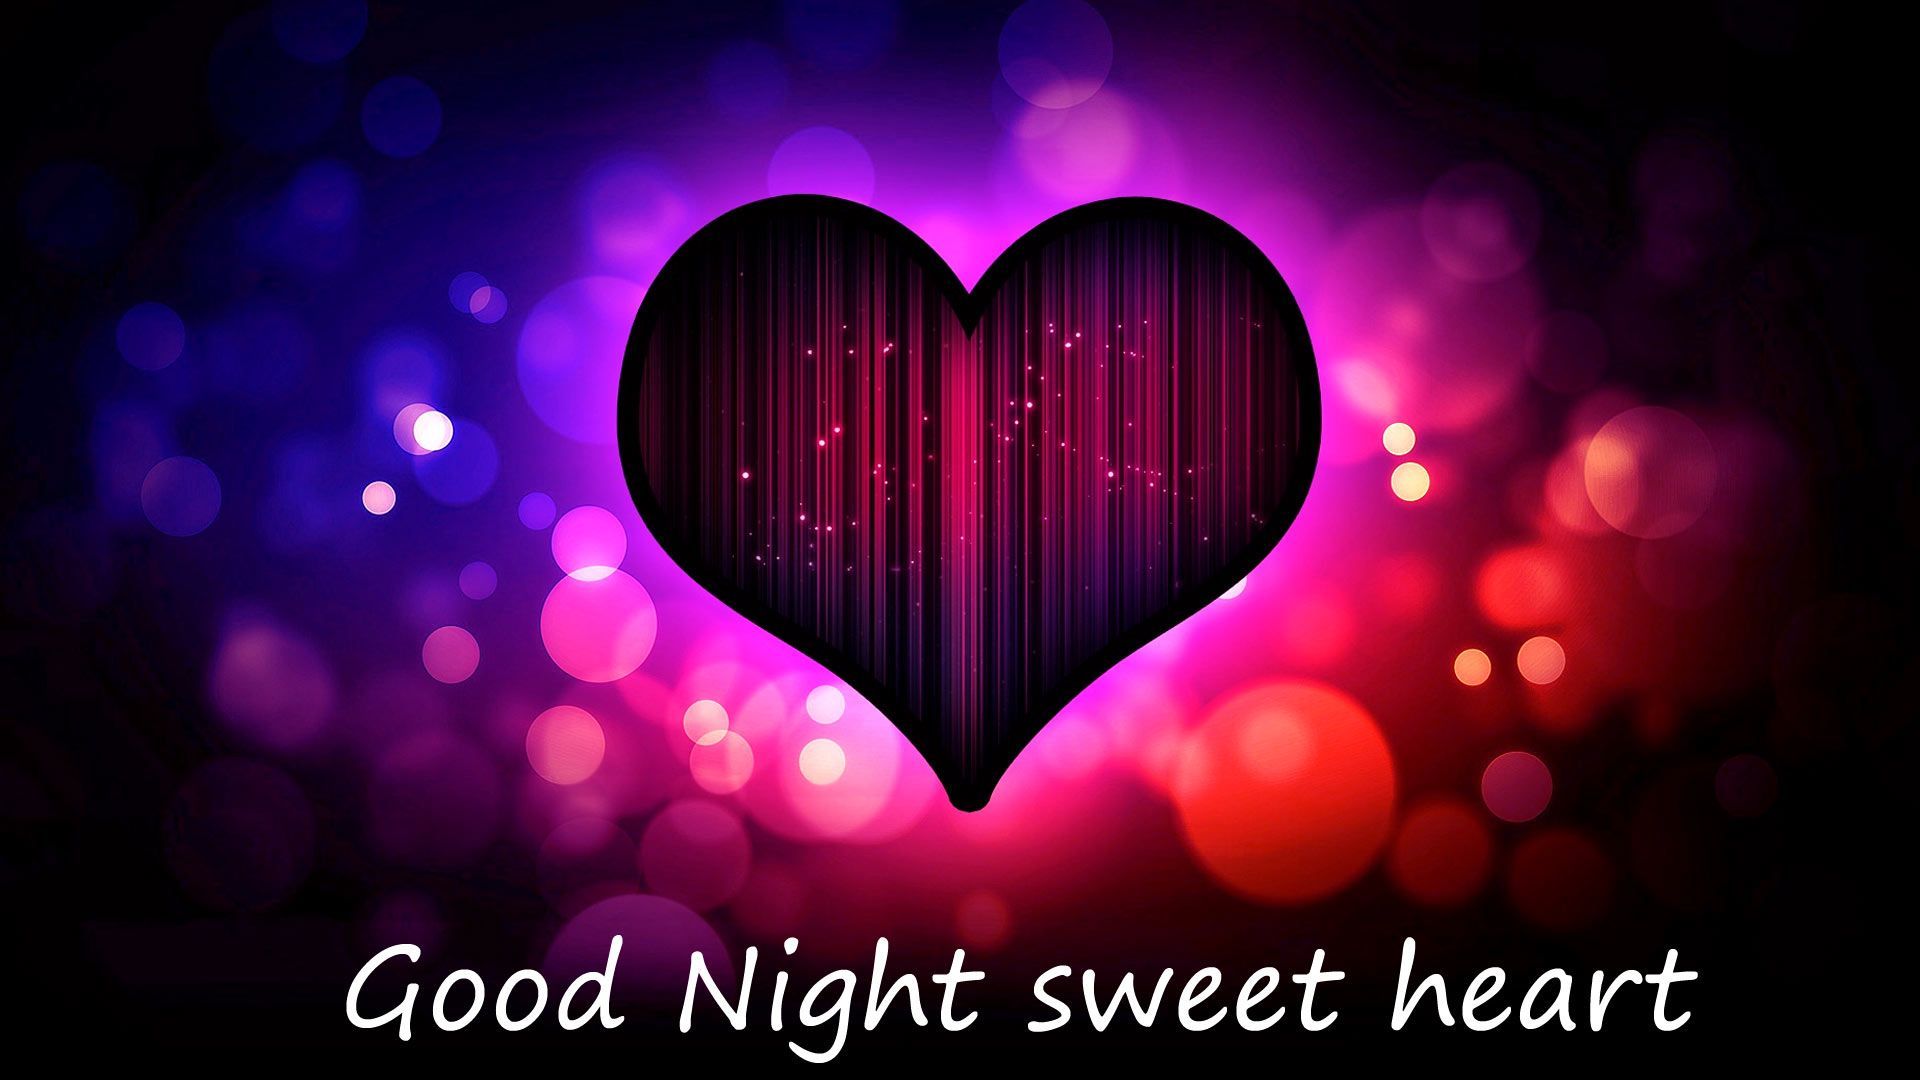 Good Night sweet love heart wallpaper – Free full hd wallpapers ...